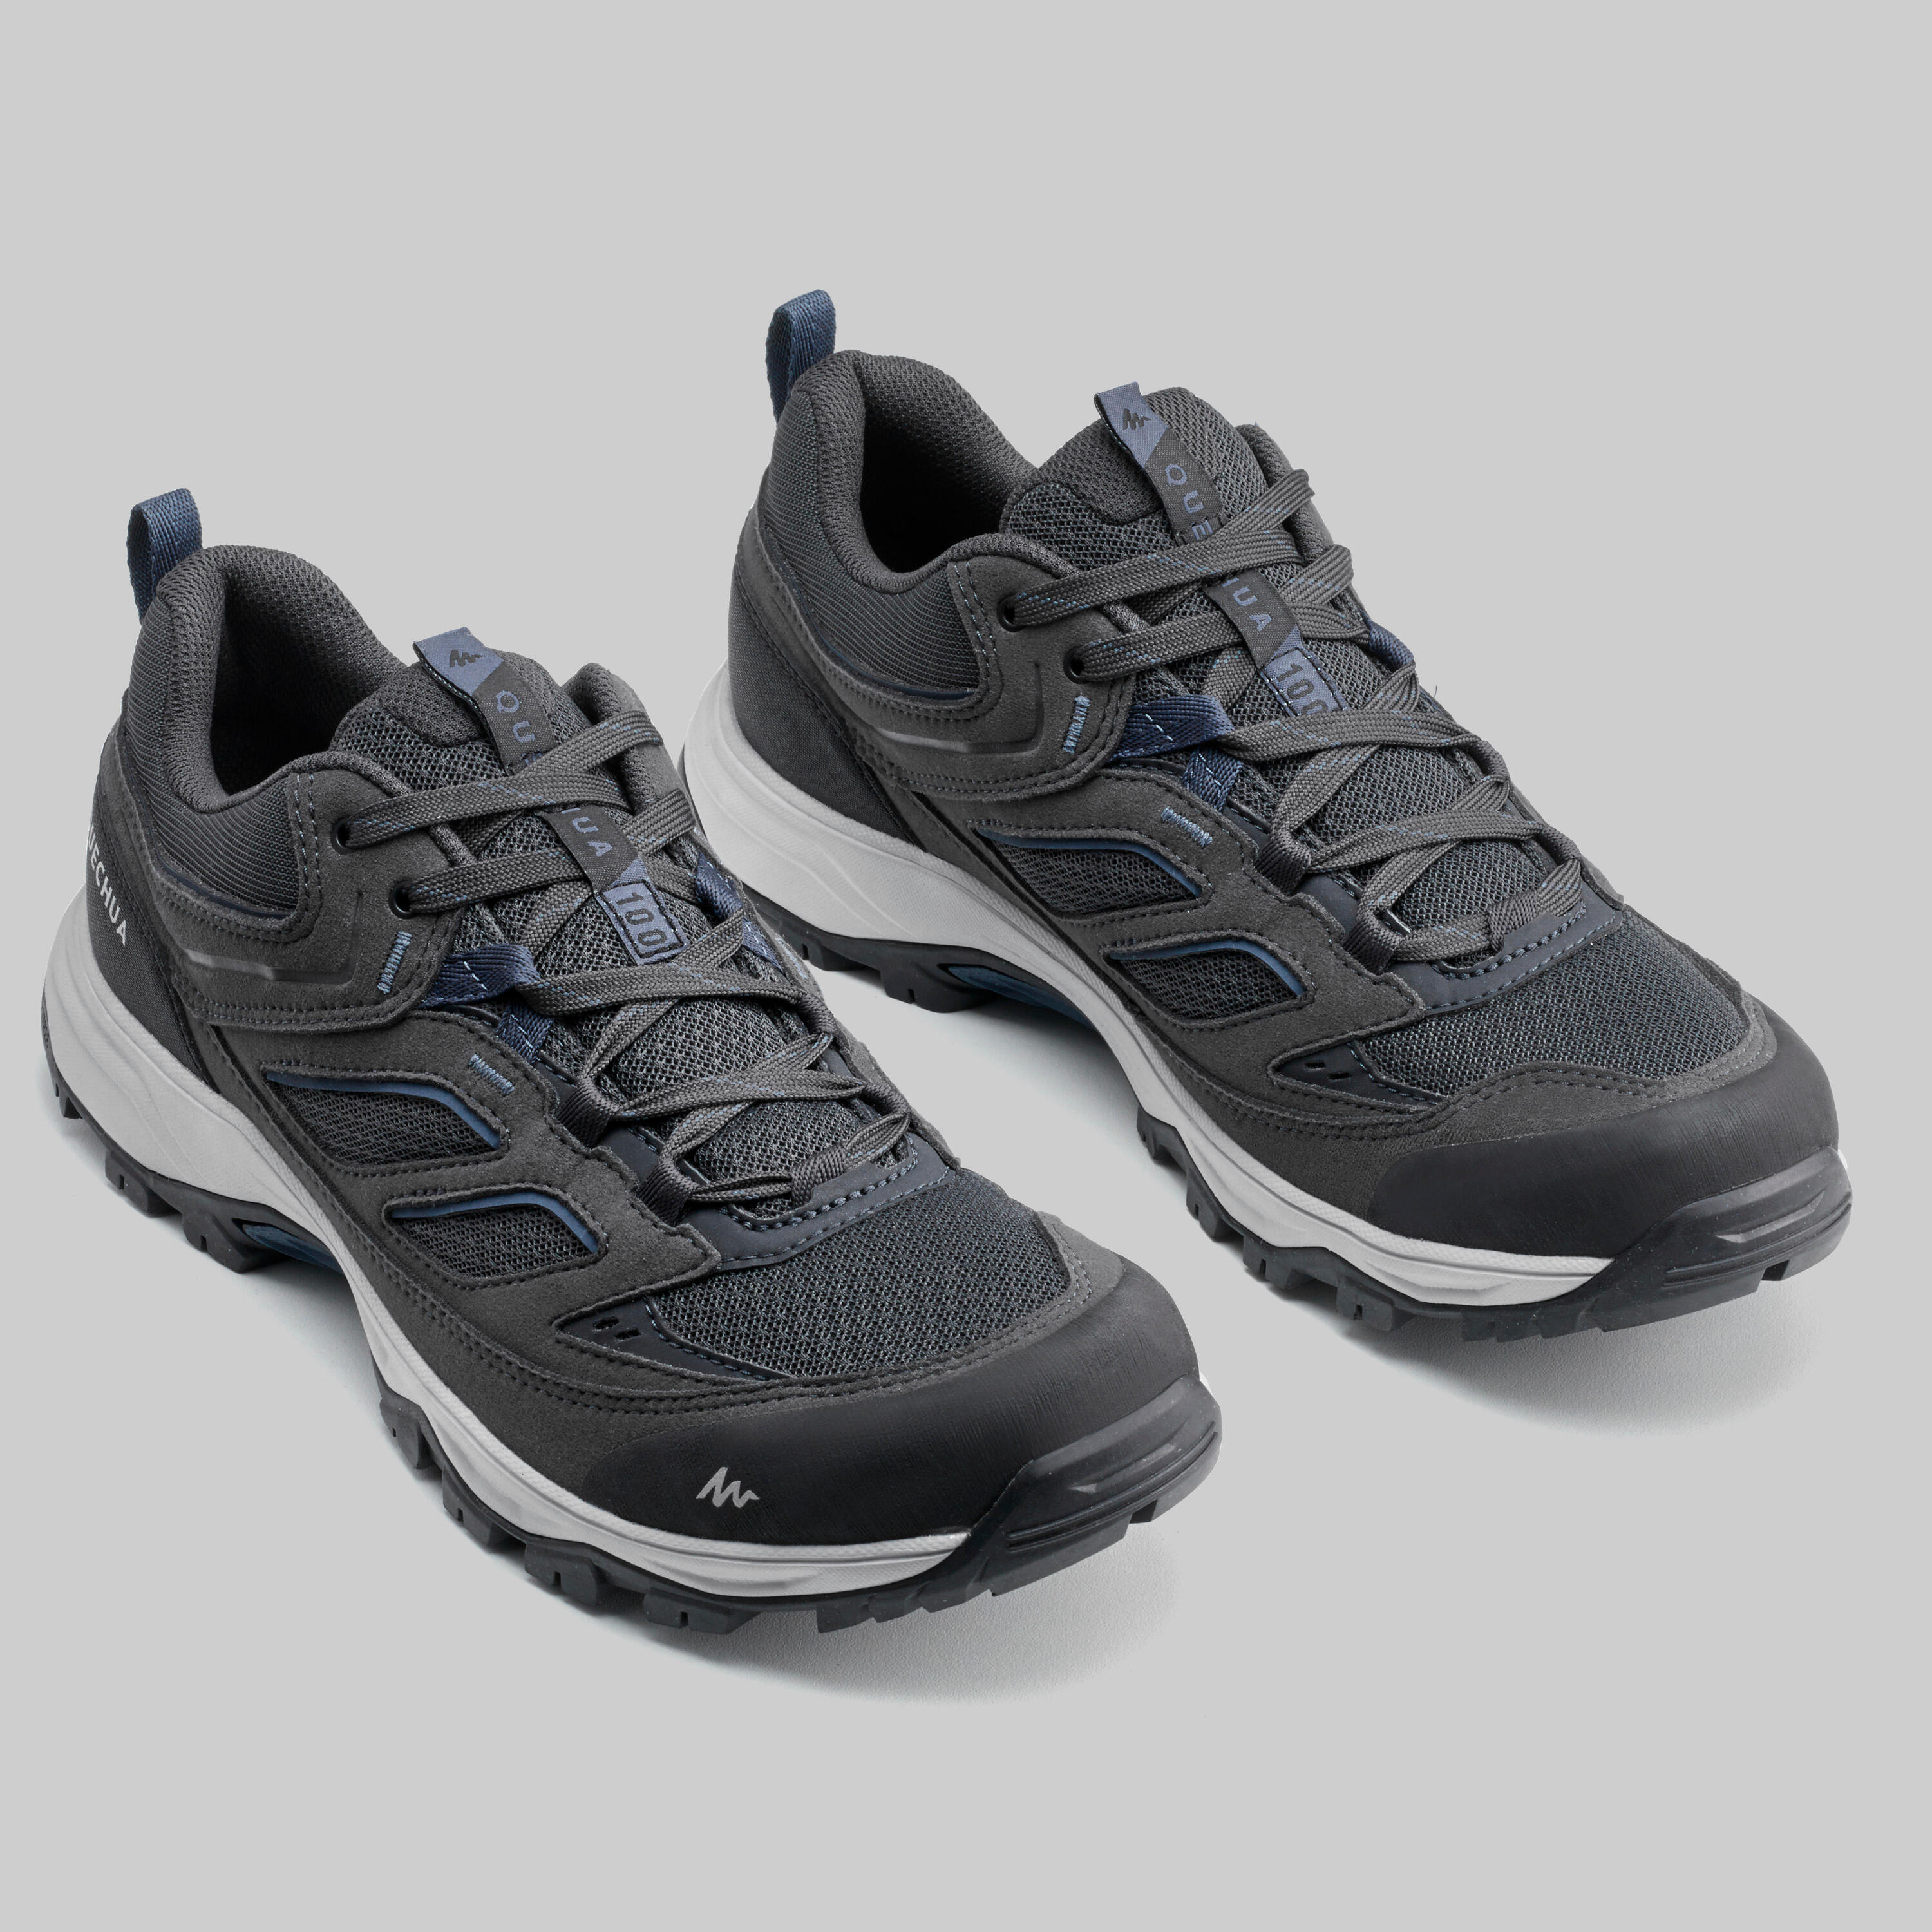 Men's mountain hiking shoes - MH100 - Grey 6/8